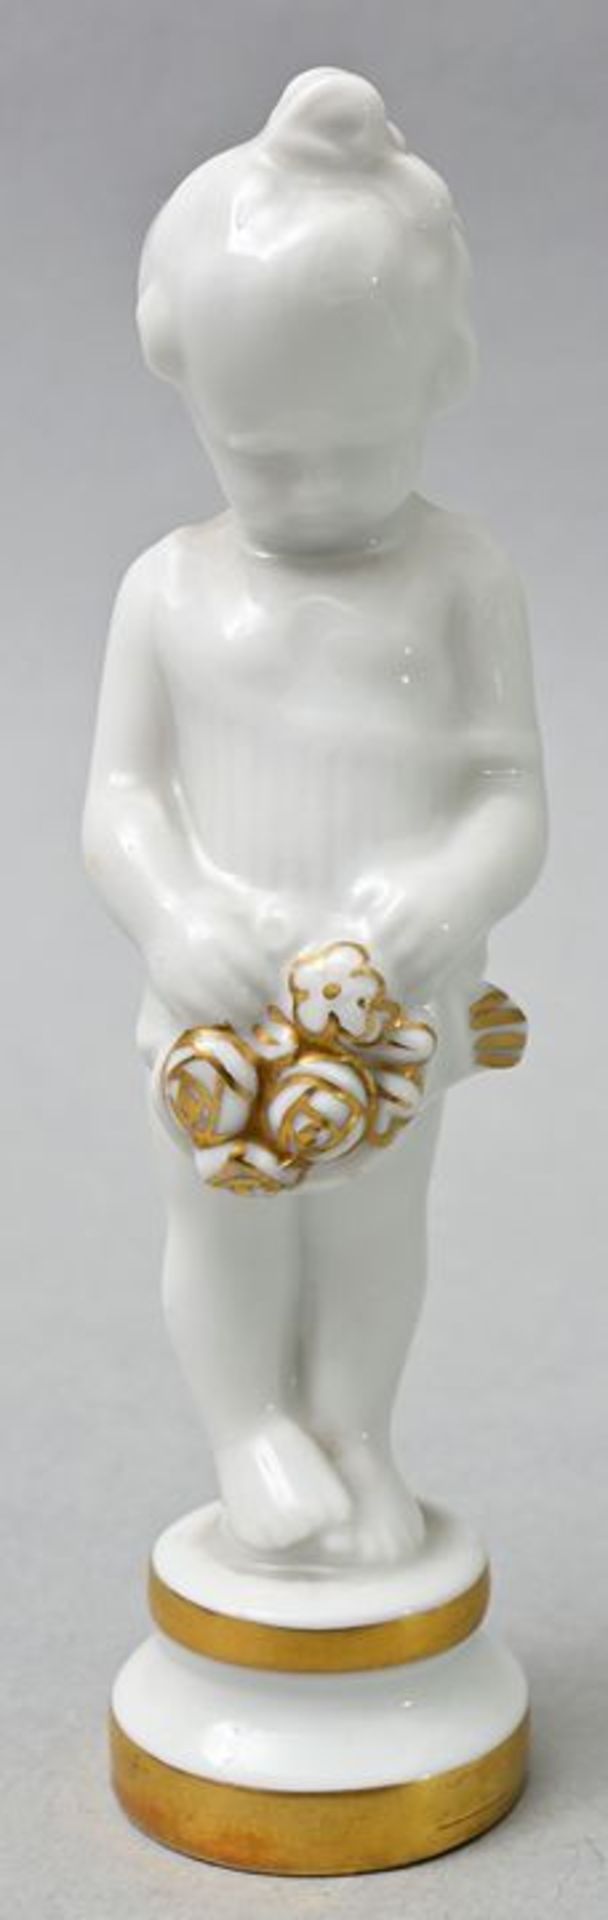 Porzellanfigürchen/ small porcelain figure